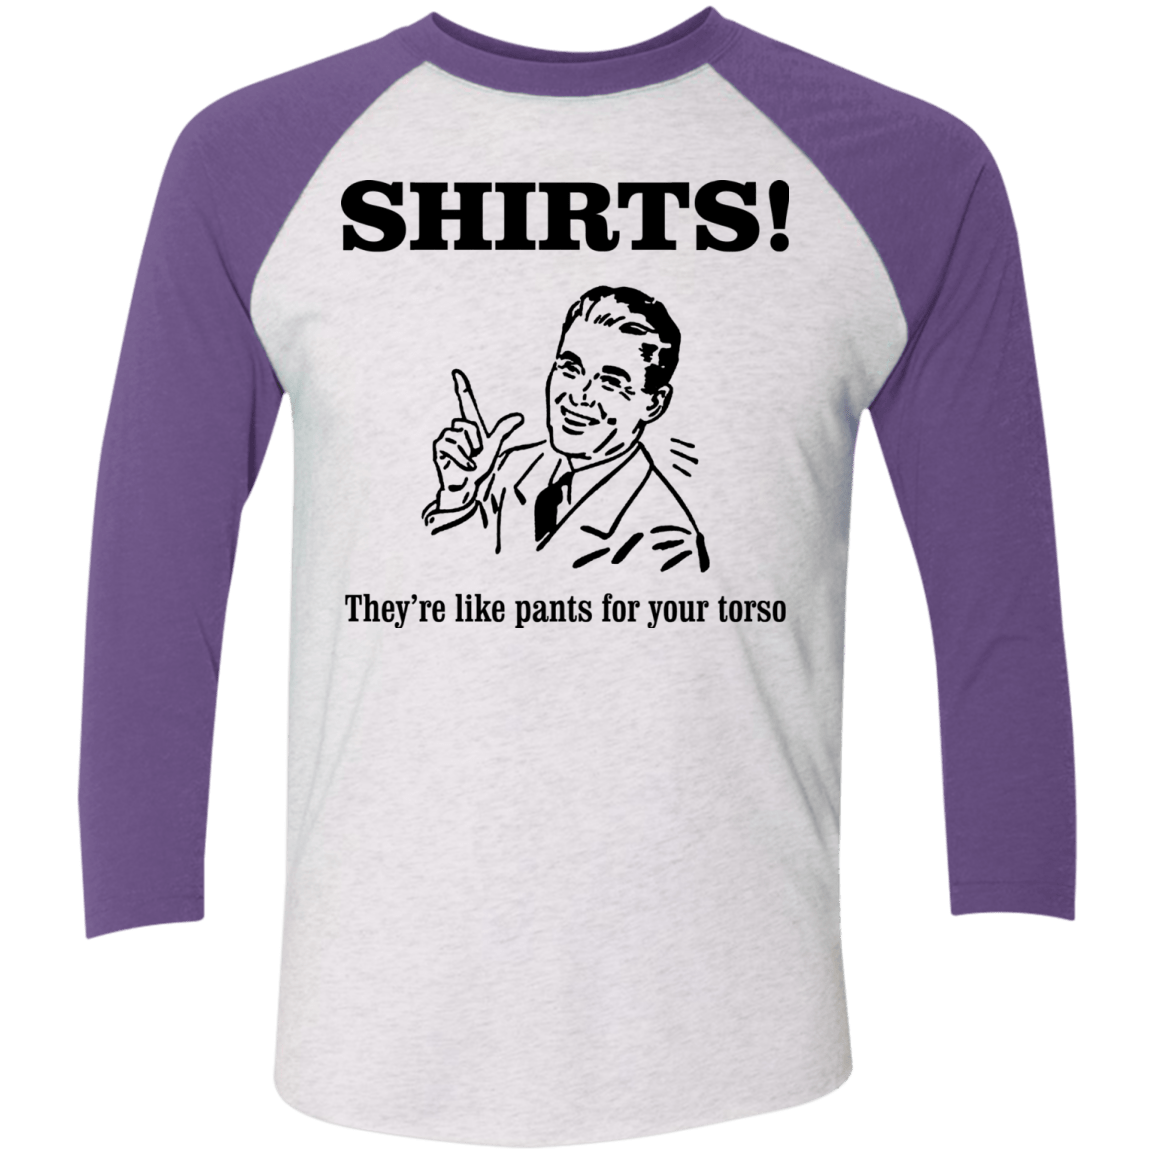 T-Shirts Heather White/Purple Rush / X-Small Shirts like pants Men's Triblend 3/4 Sleeve